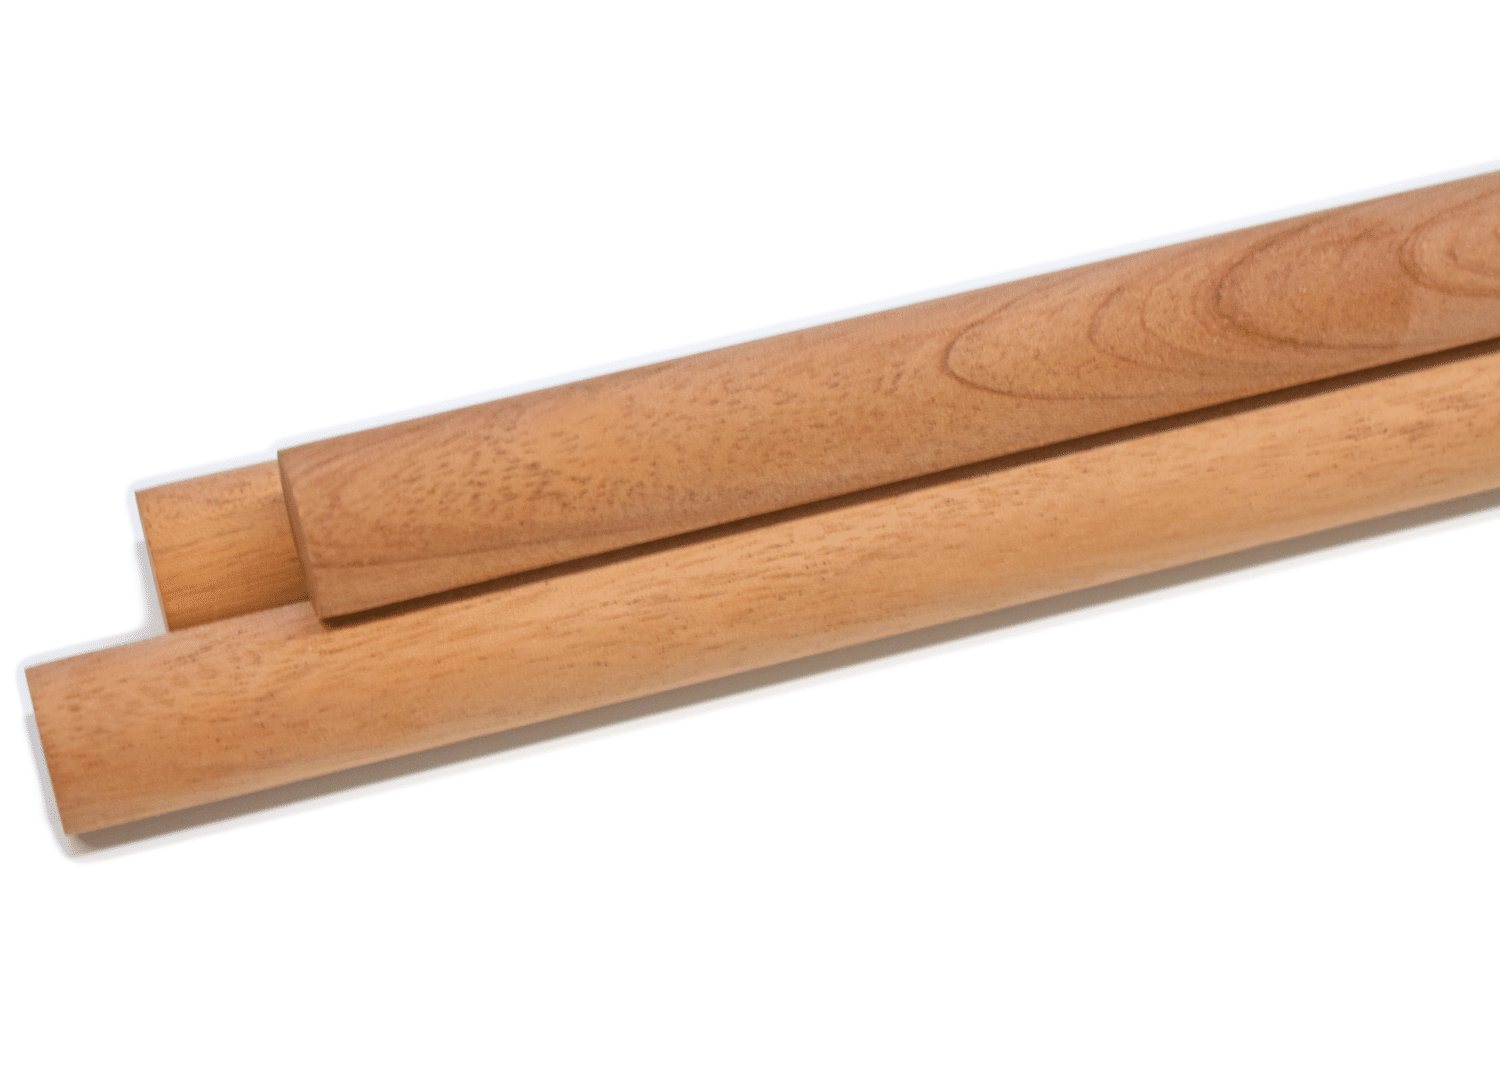 Wooden Dowel Rod 1-3/4 x 36 hardwood dowel stick pole